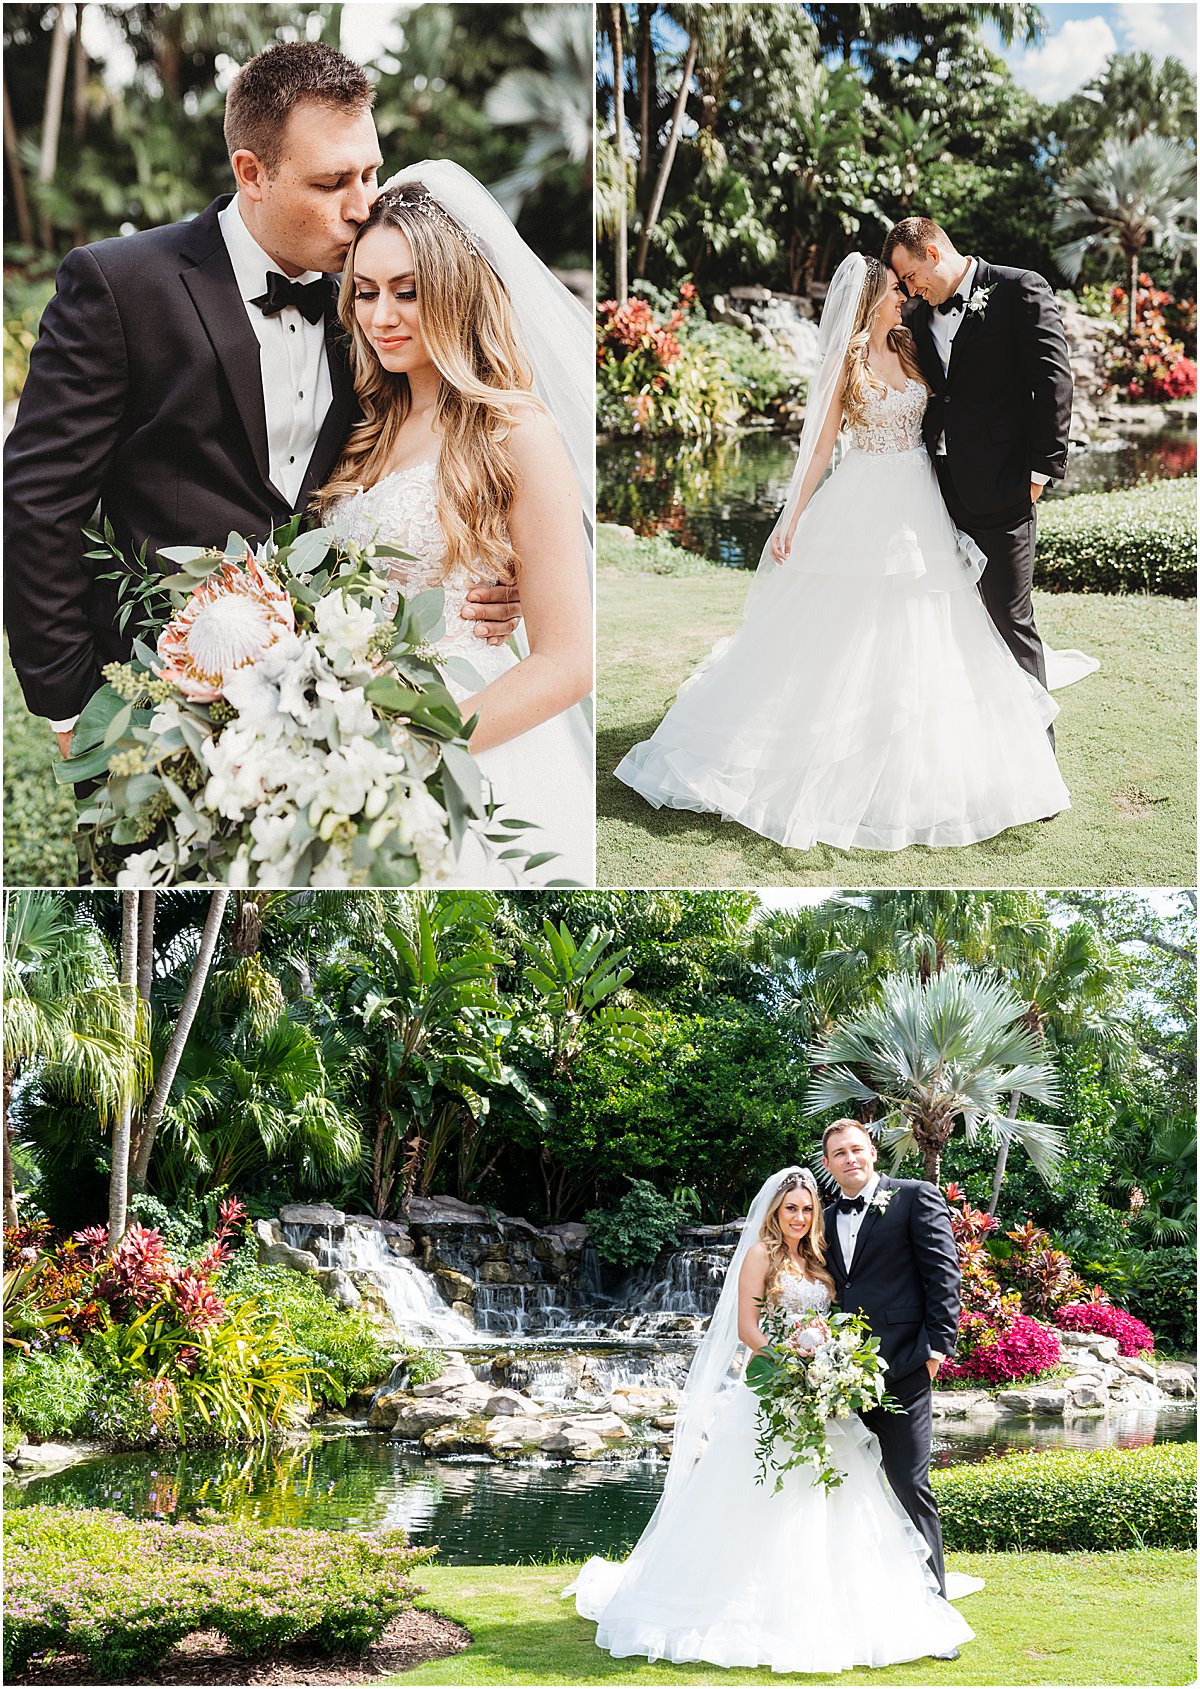 Garden Waterfall Wedding | Deer Creek Country Club | Boca Raton FL | Married in Palm Beach | www.marriedinpalmbeach.com | Organic Moments Photography